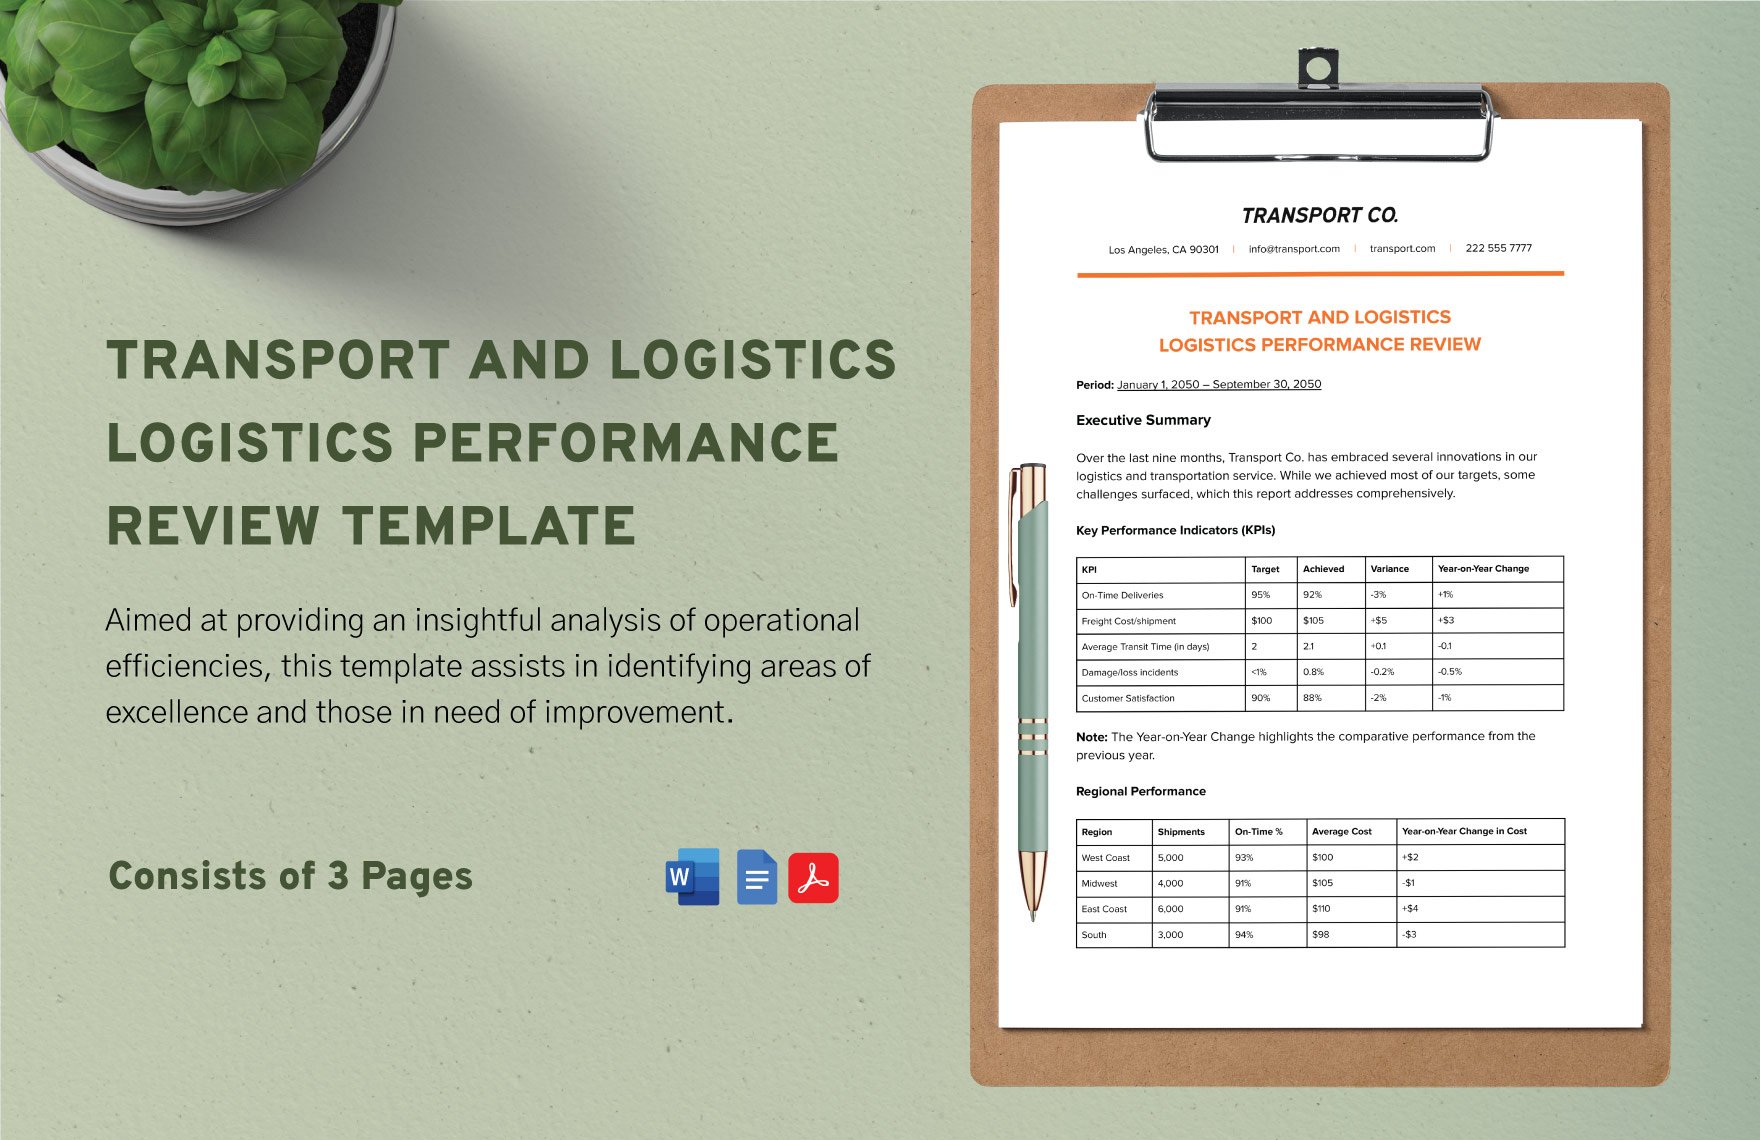 Transport and Logistics Logistics Performance Review Template